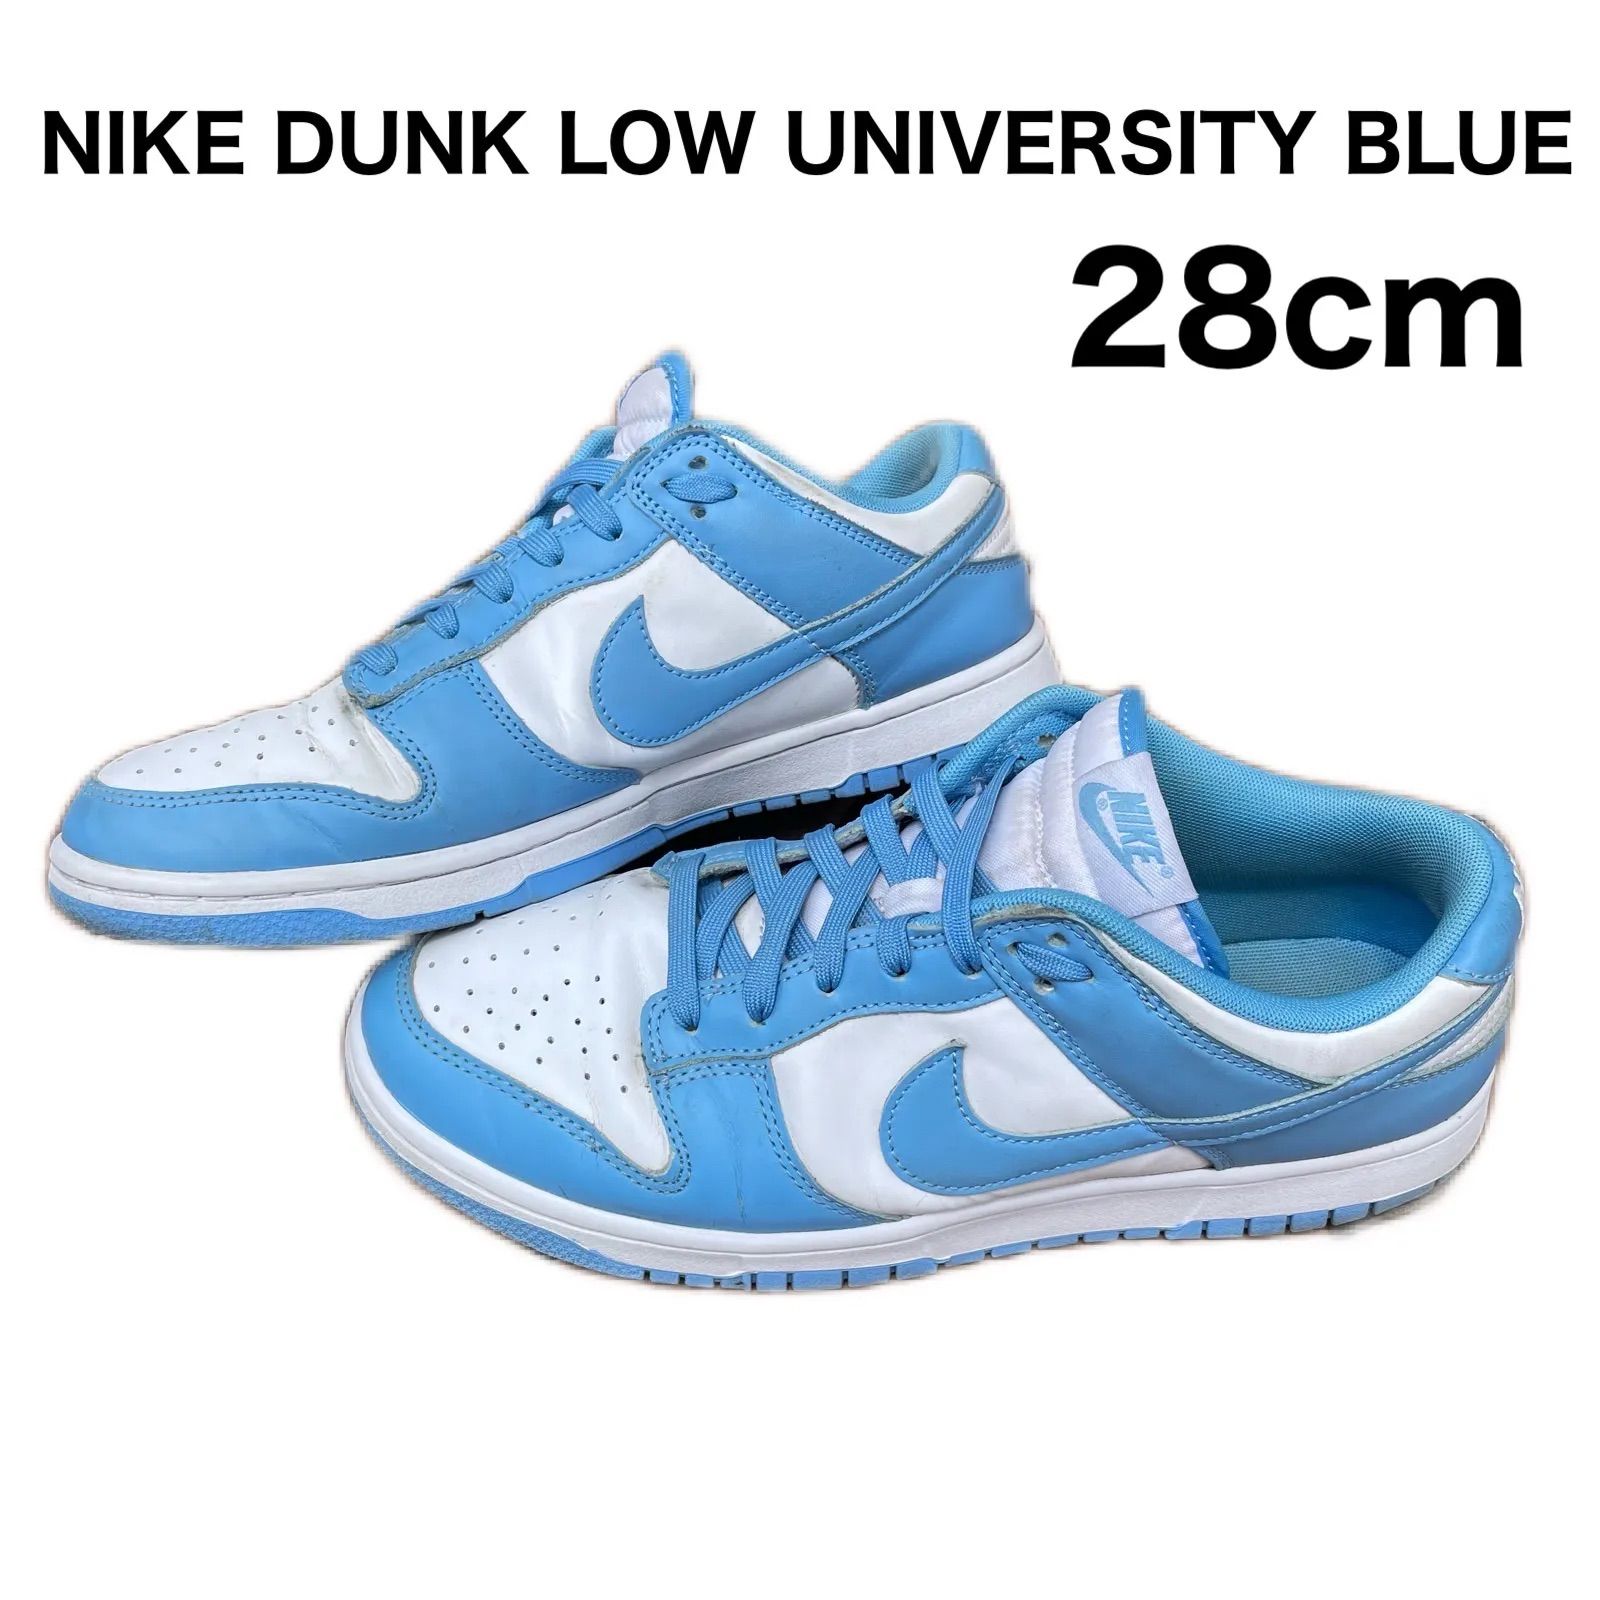 NIKE DUNK LOW UNIVERSITY BLUE 28cm